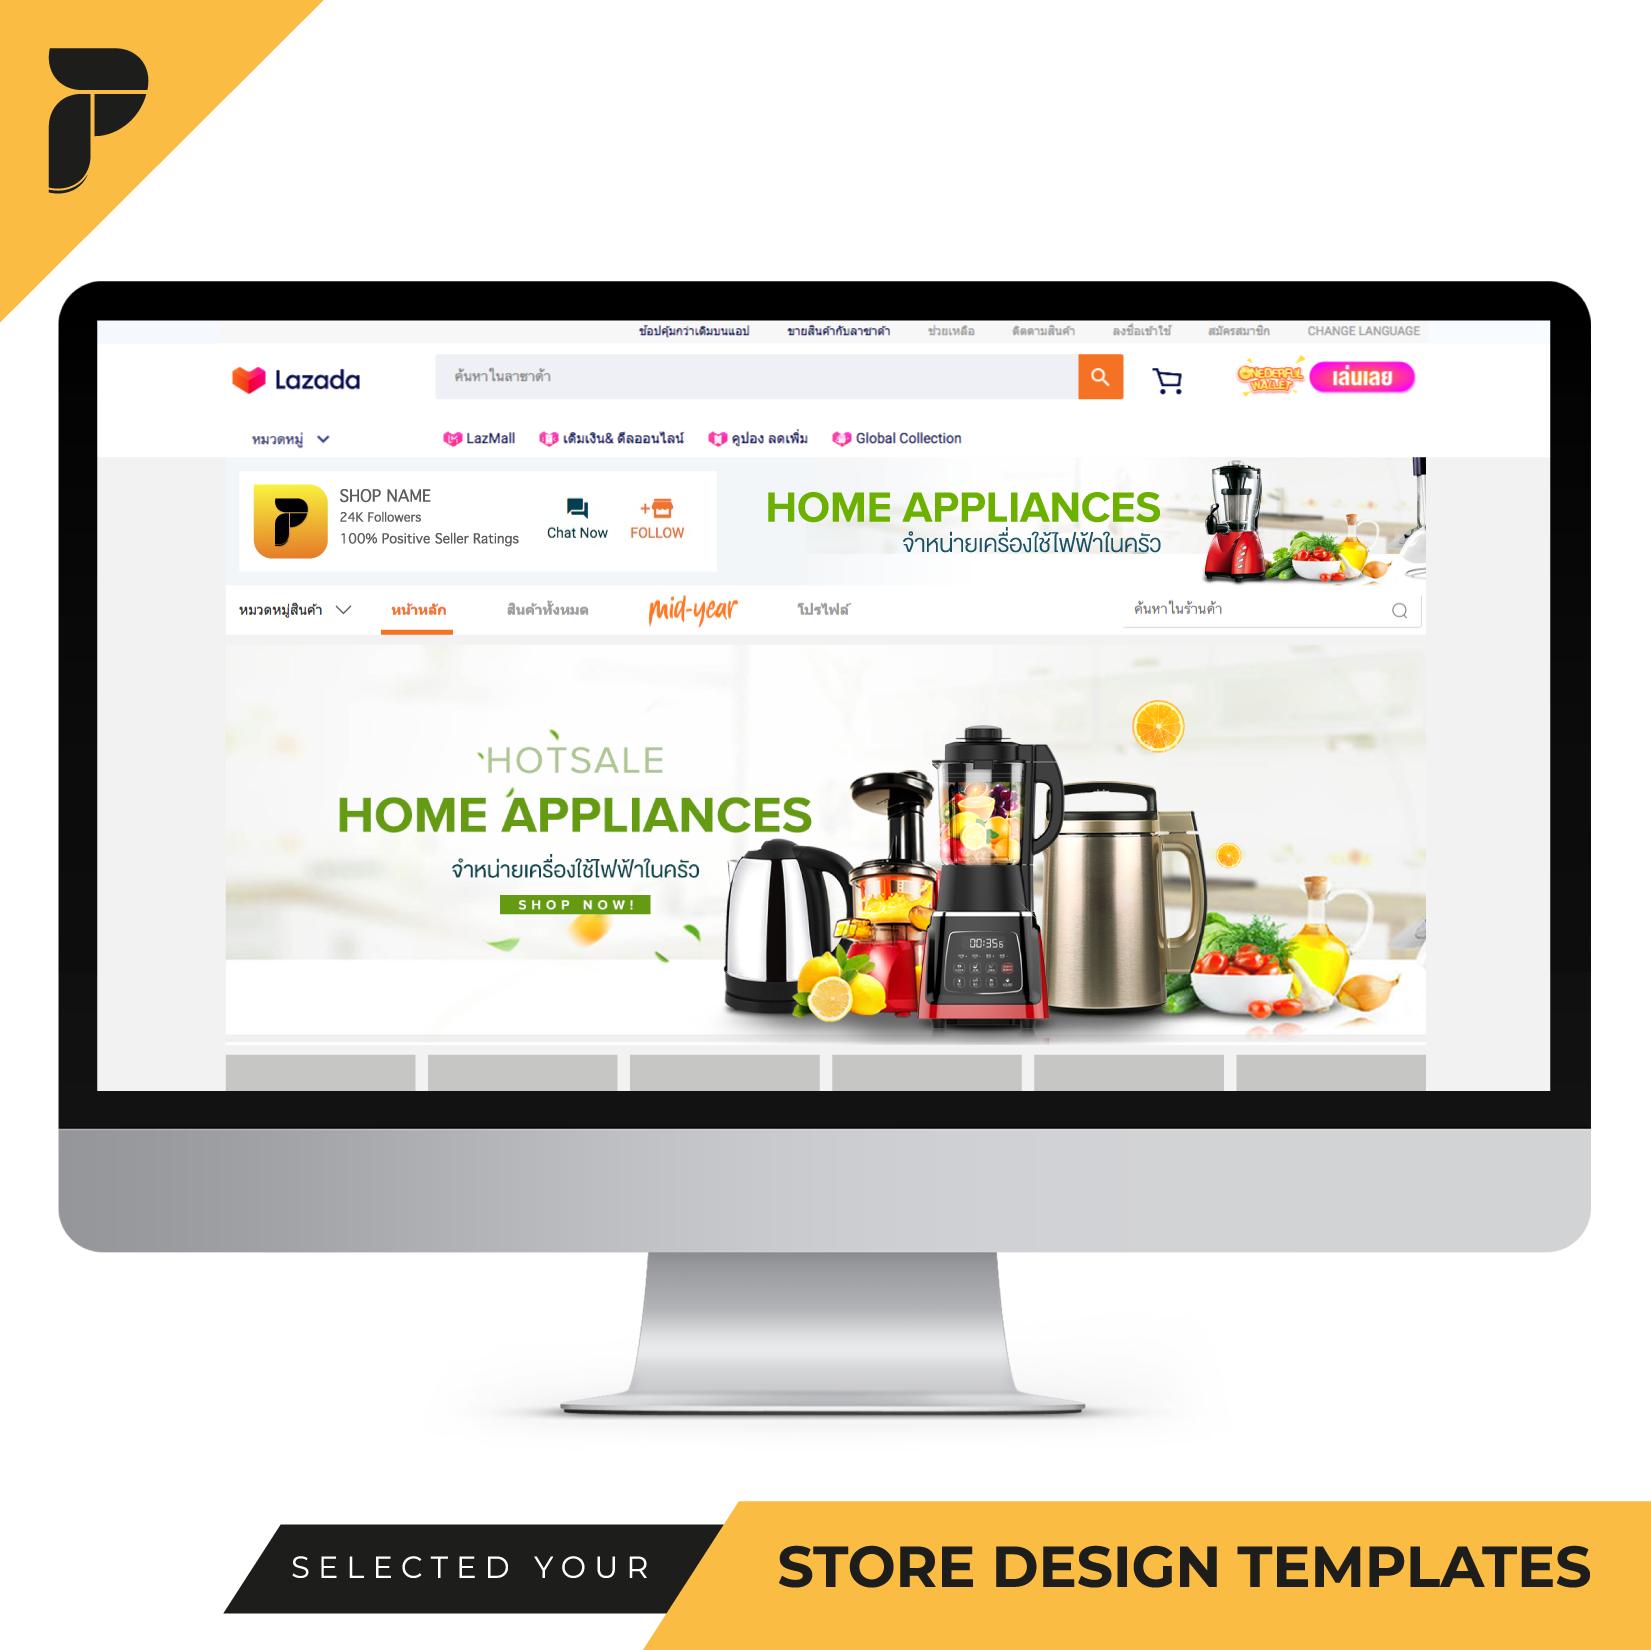 Store Design Template Banner by PathGraphic Studio - Home Appliances แบนเนอร์ตกแต่งร้าน แบนเนอร์สำเร็จรูป สำหรับตกแต่งหน้าร้านค้าออนไลน์